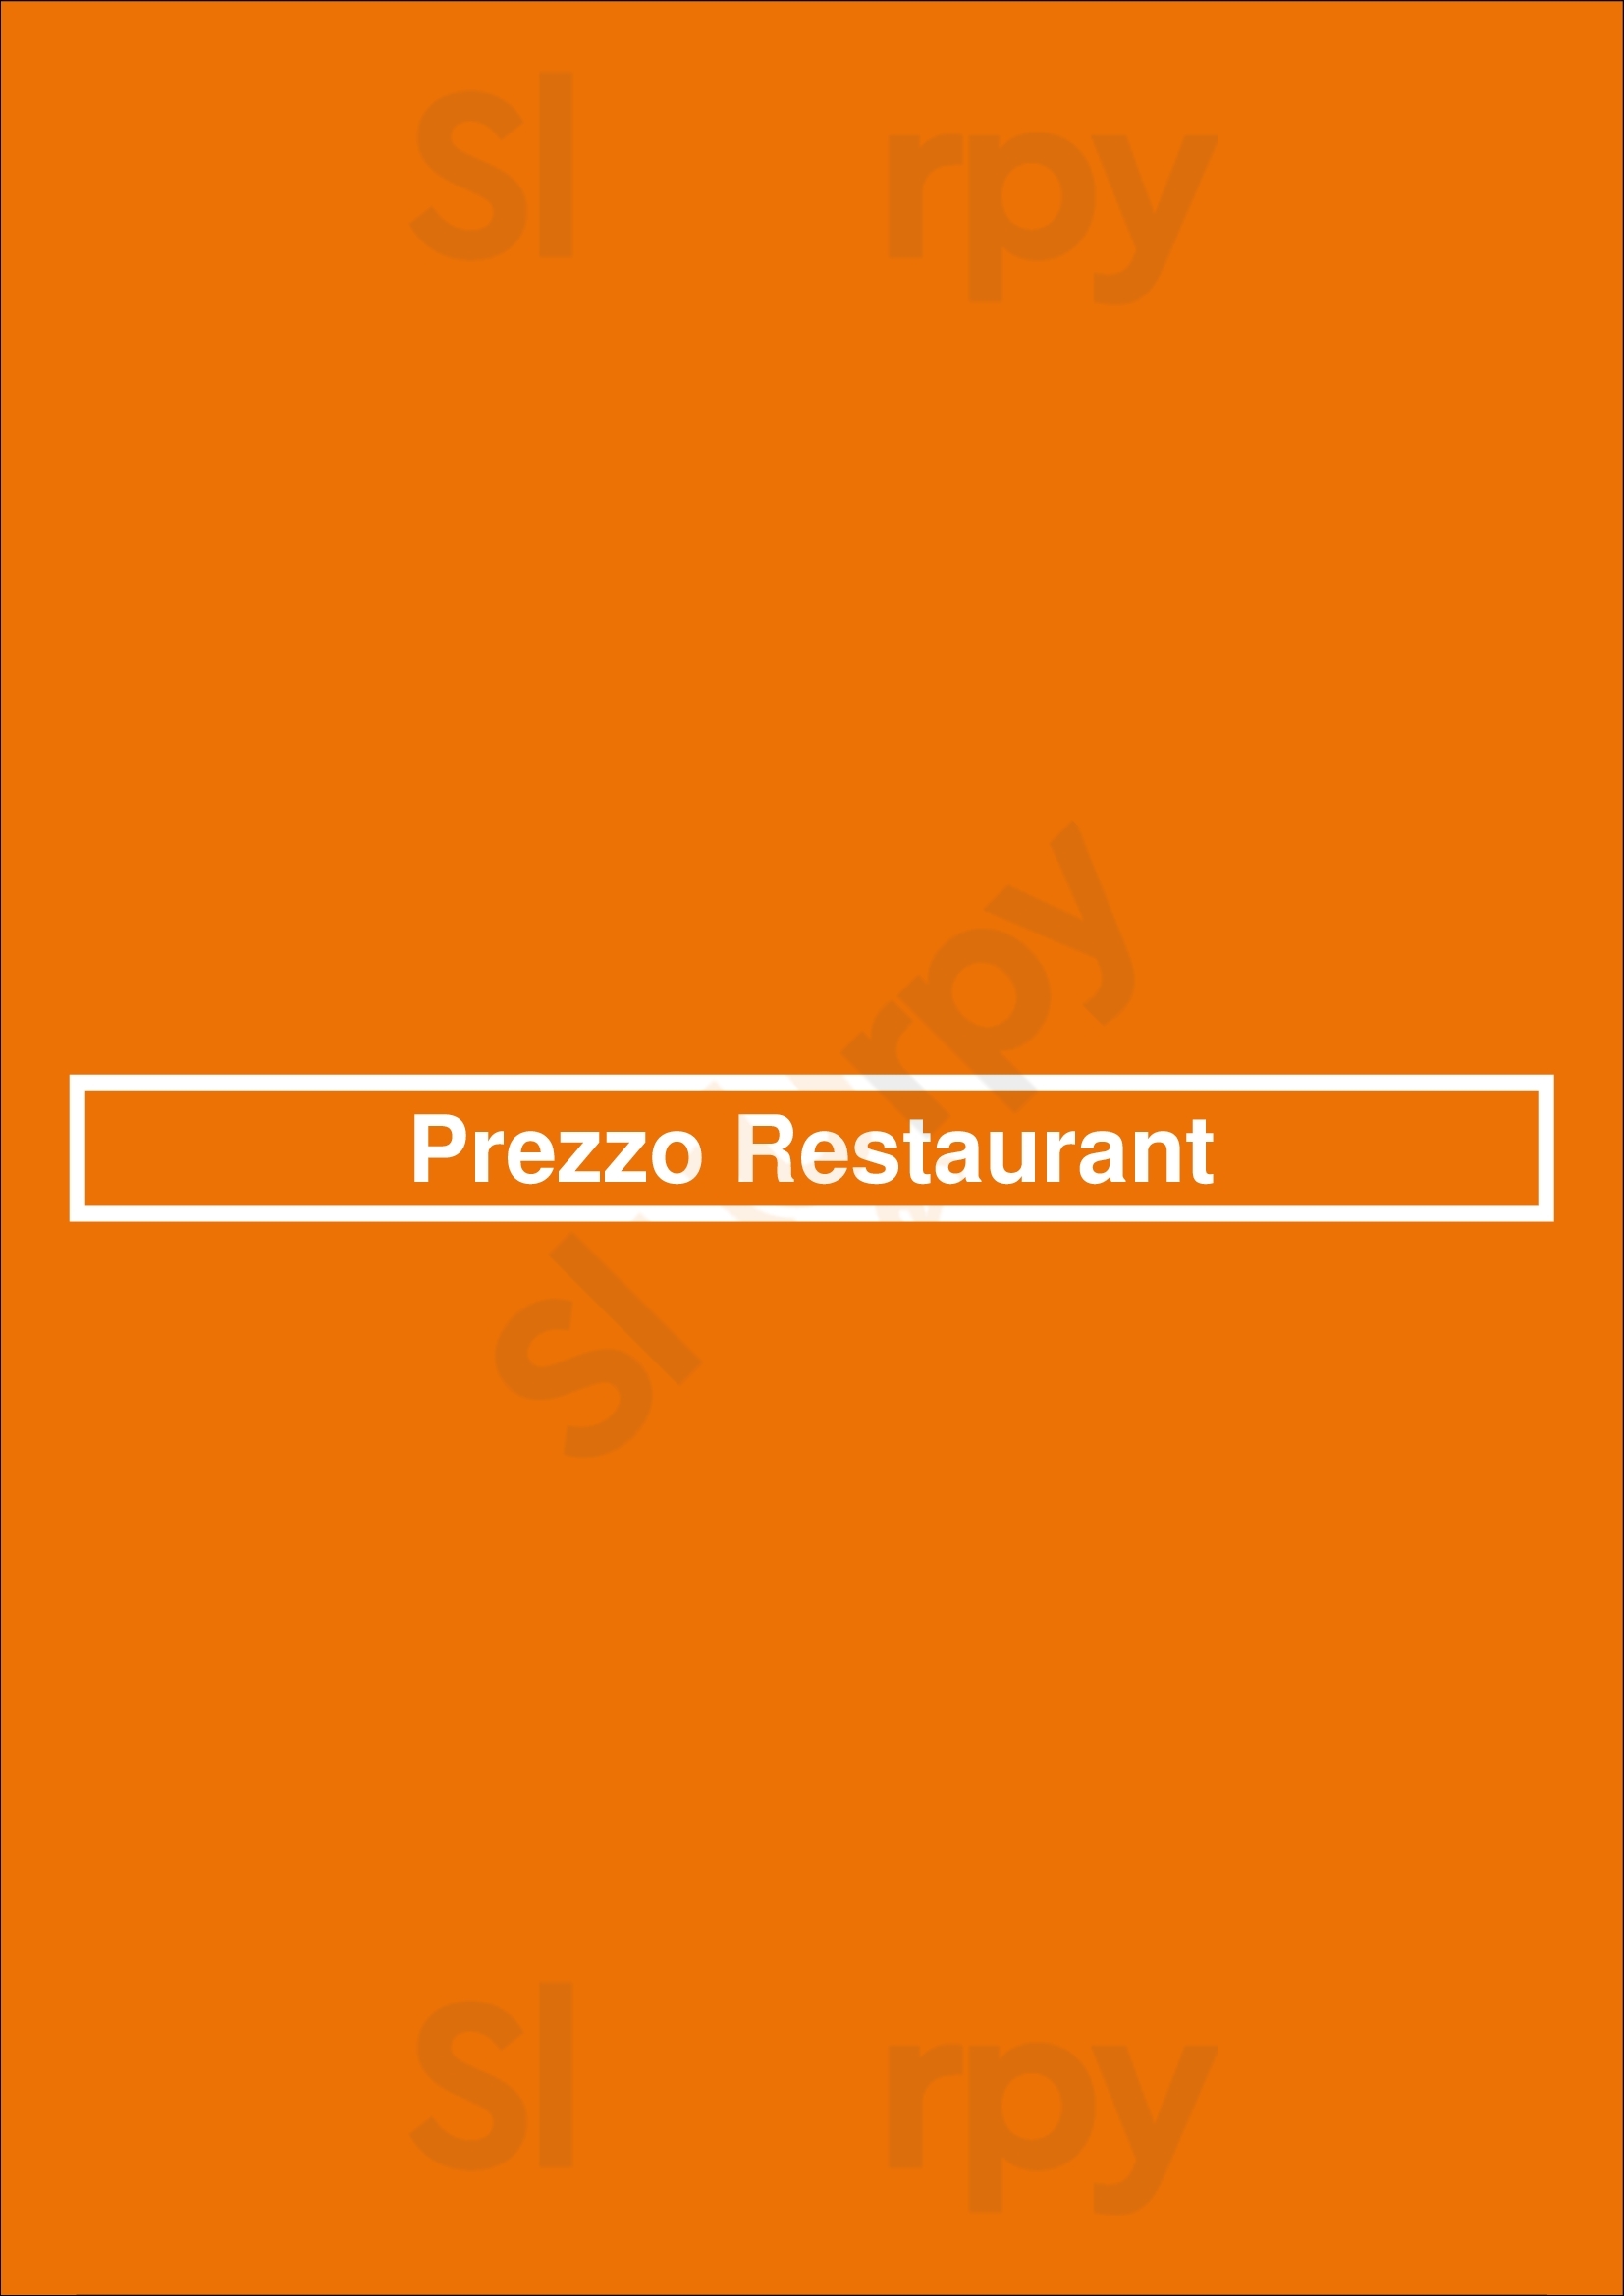 Prezzo Restaurant Adelaide Menu - 1